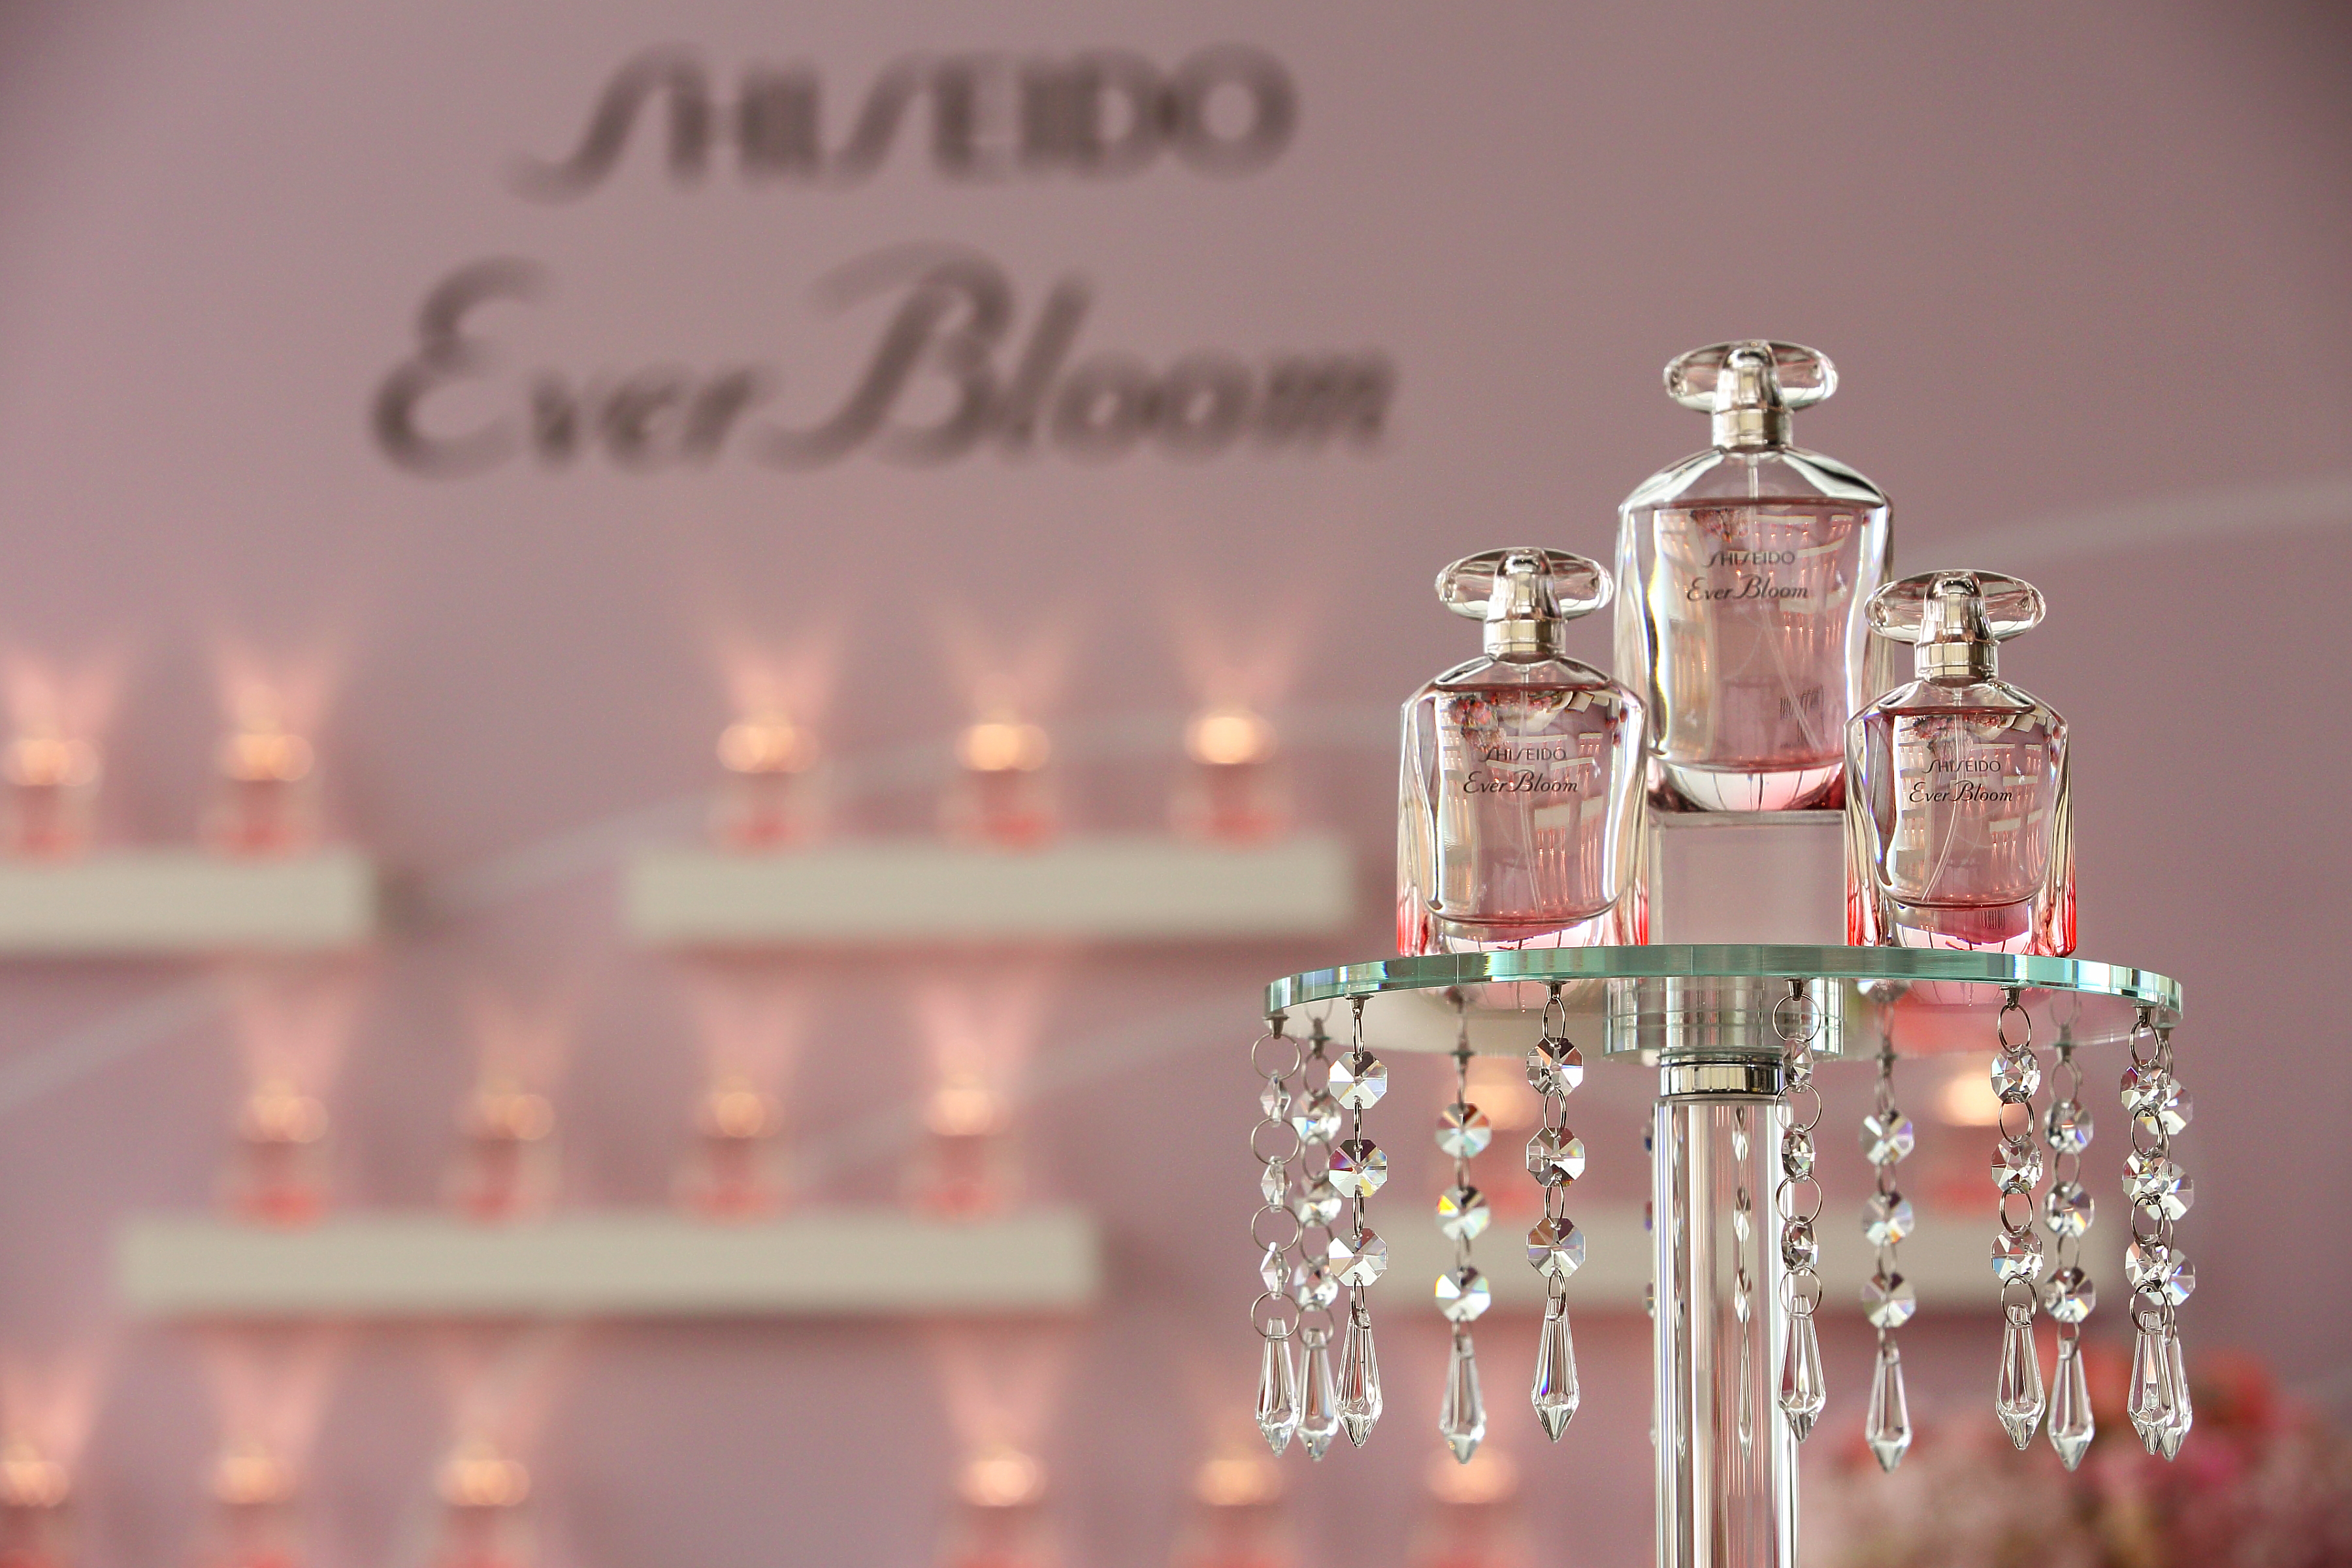 shiseido ever bloom 50ml